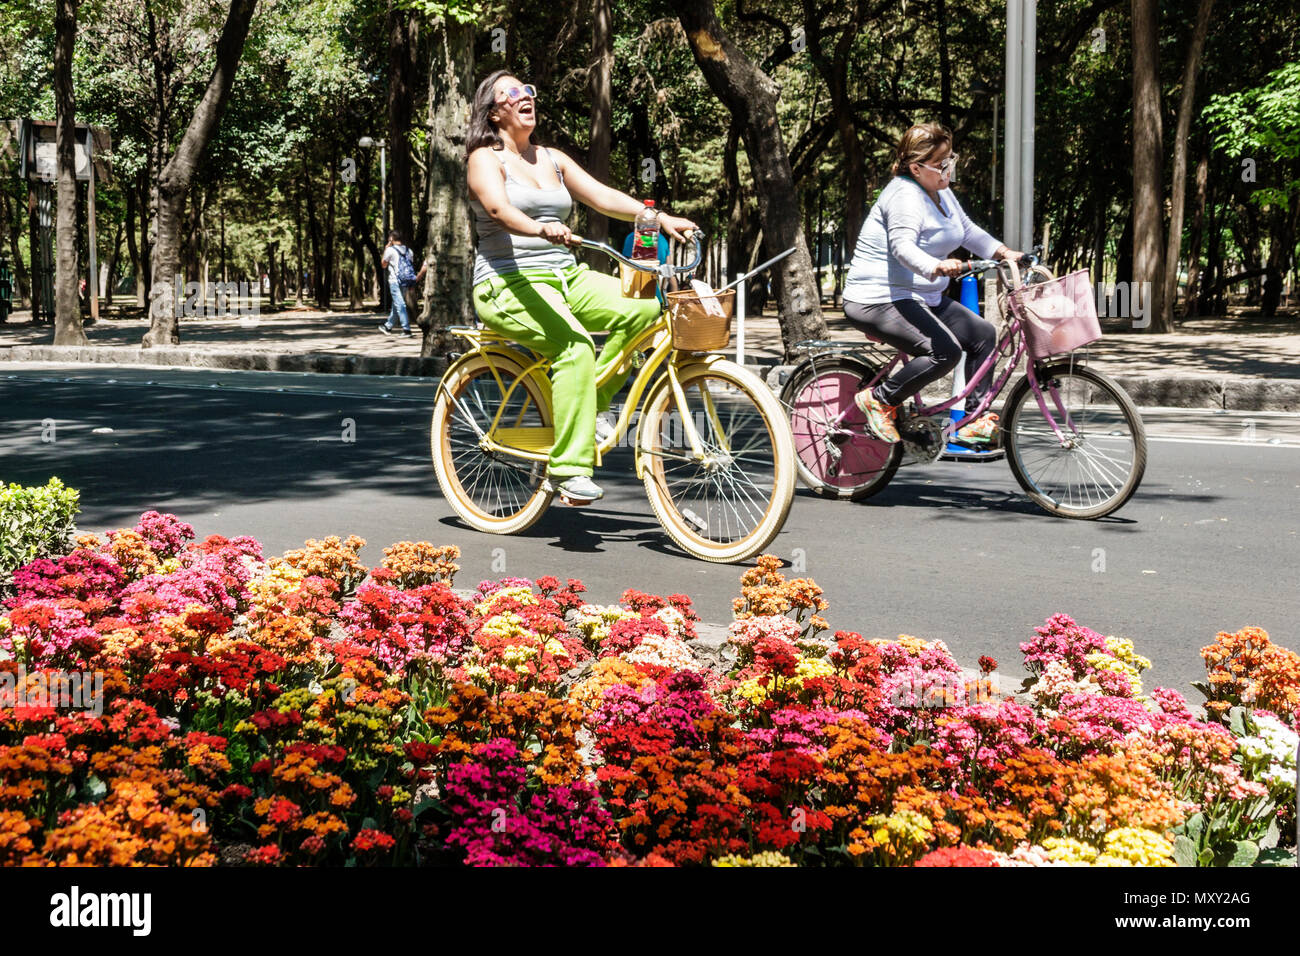 Mexico City,Hispanic Bosque de Chapultepec forest,Paseo la Reforma,Muevete en Bici,Move by Bike,car-free Sundays bicycle bicycles bicycling riding bik Stock Photo